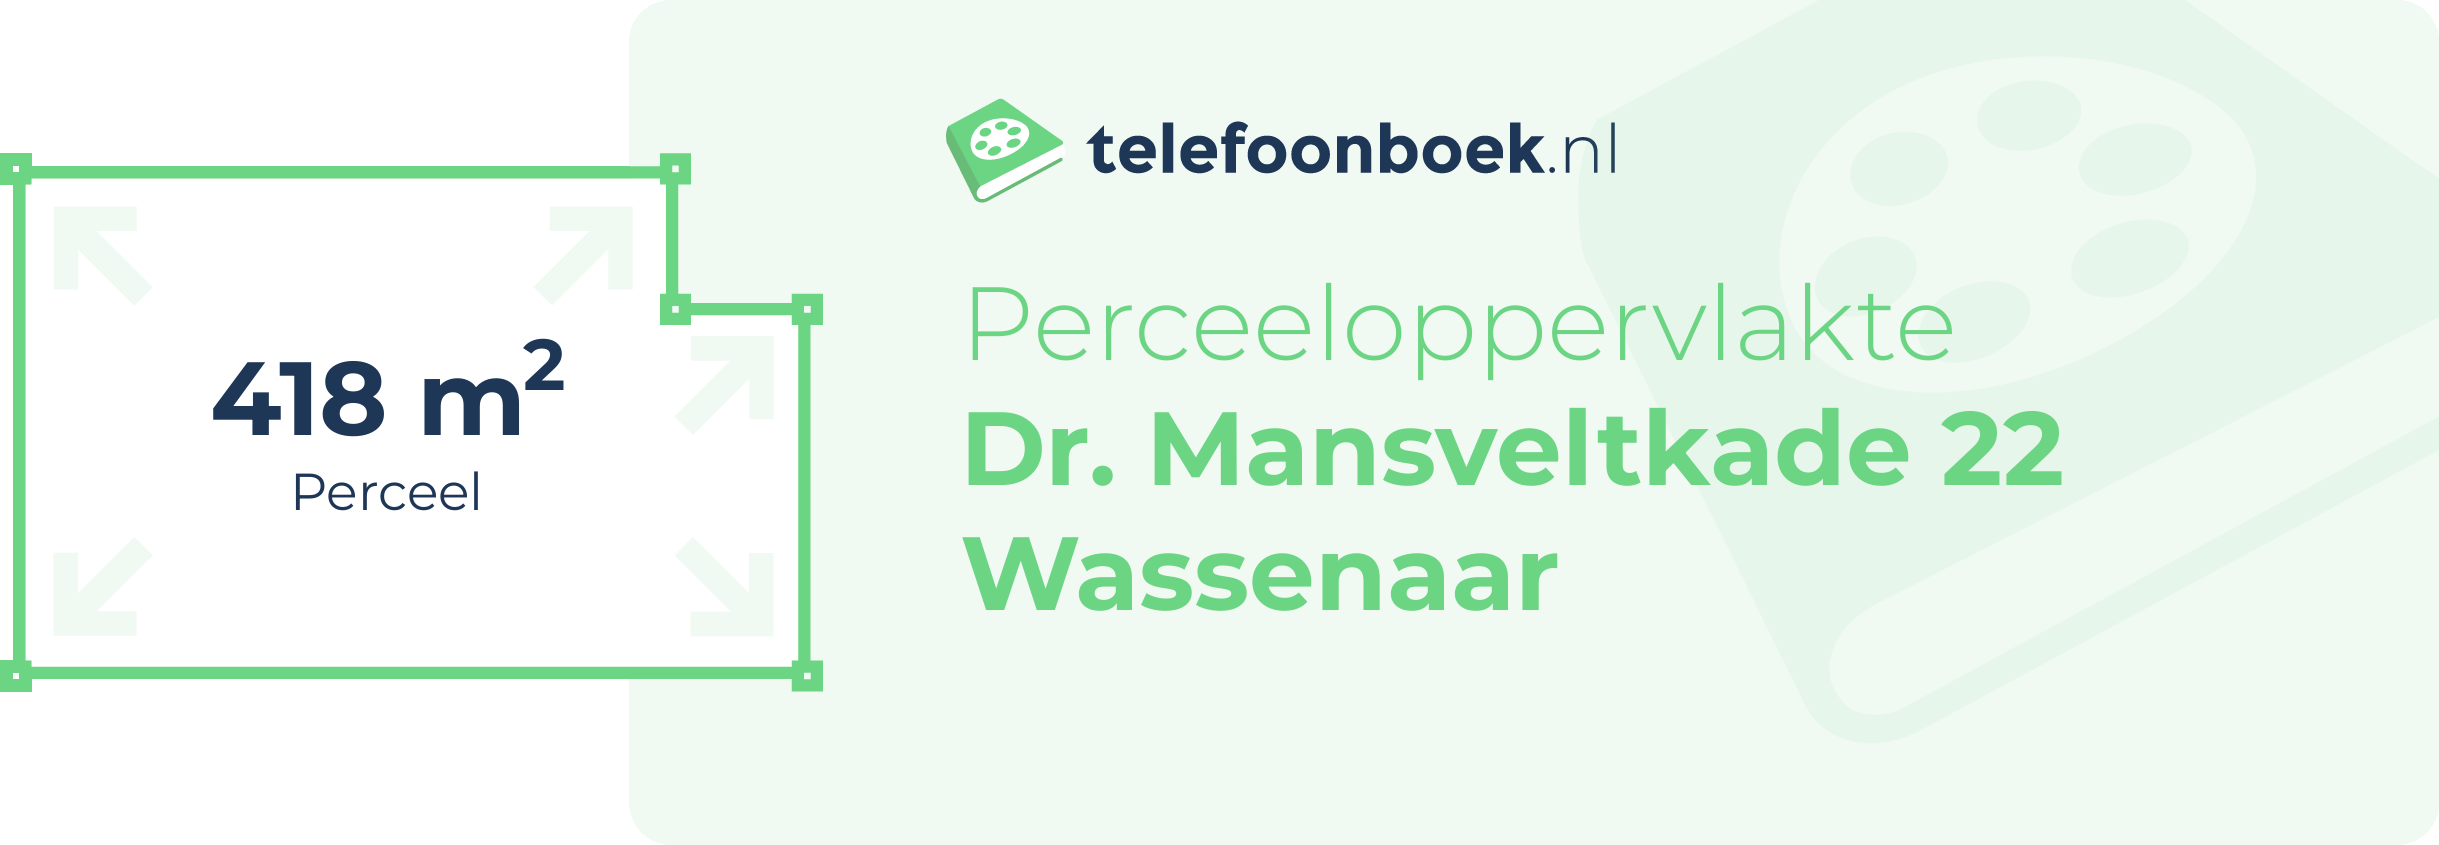 Perceeloppervlakte Dr. Mansveltkade 22 Wassenaar